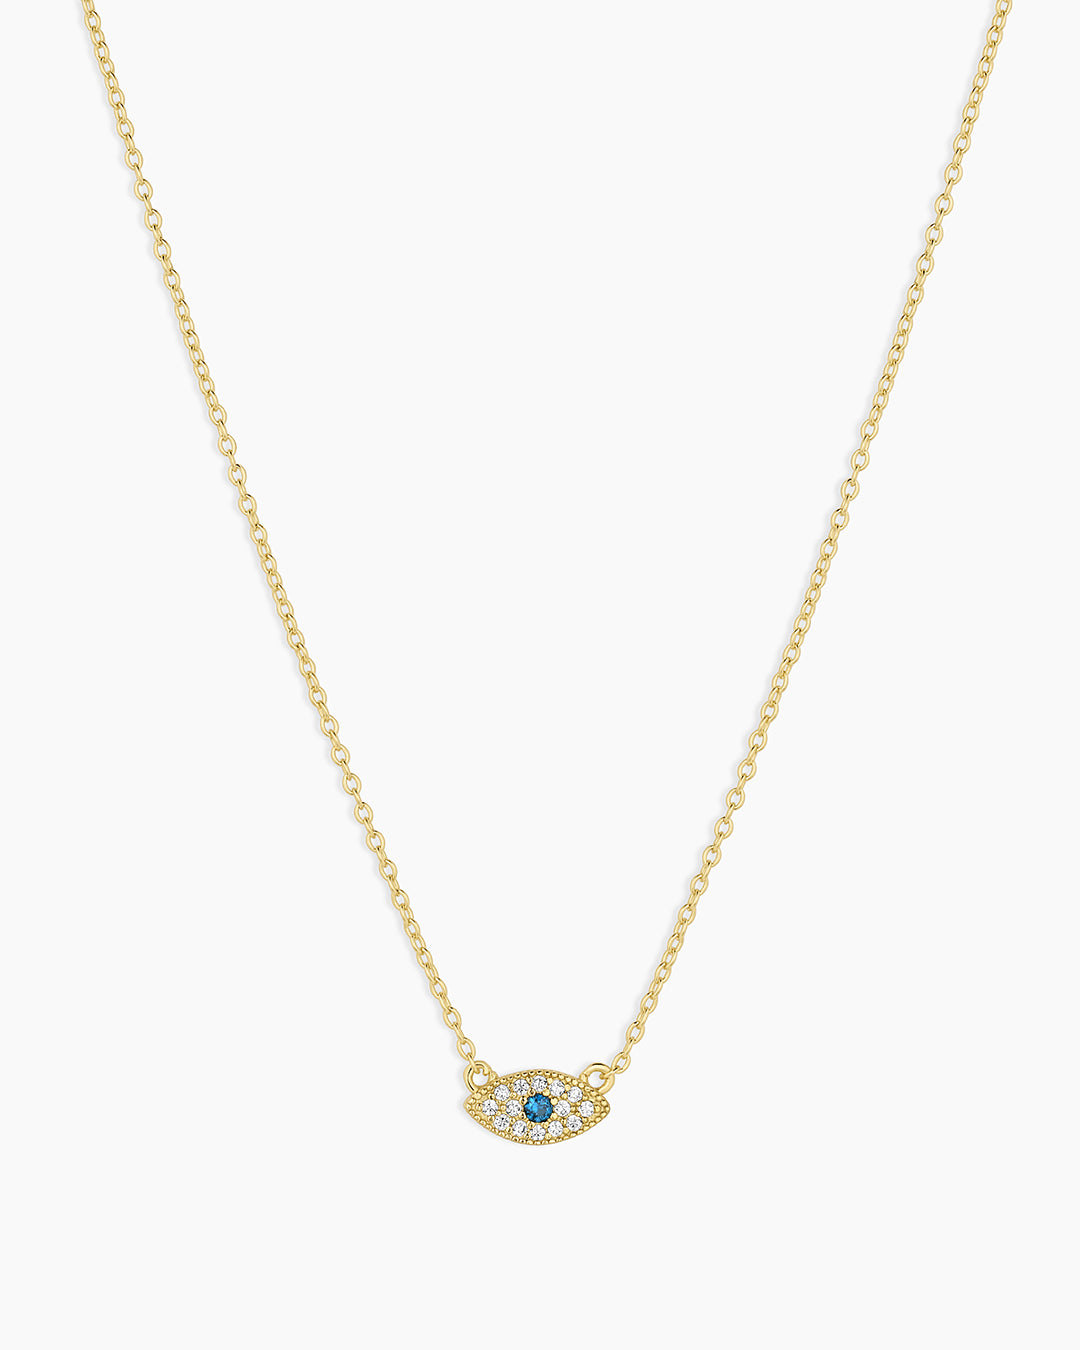 White CZ / London Blue Nanogem Evil Eye Charm Necklace necklace for protection || option:: Gold Plated